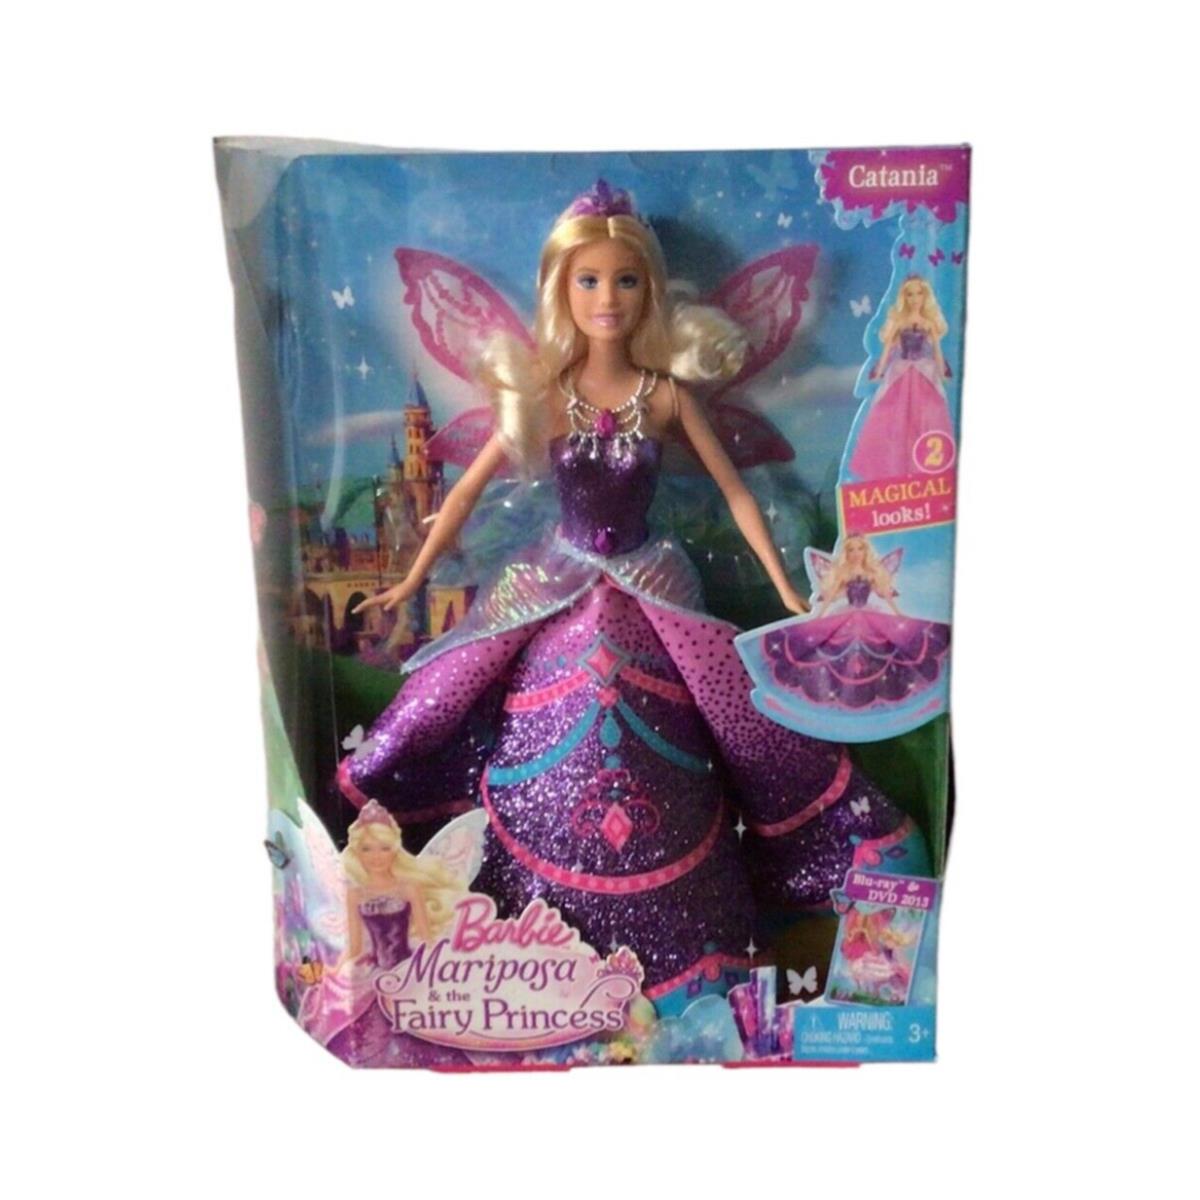 Barbie Mariposa The Fairy Princess Catania Dvd Sold Separately